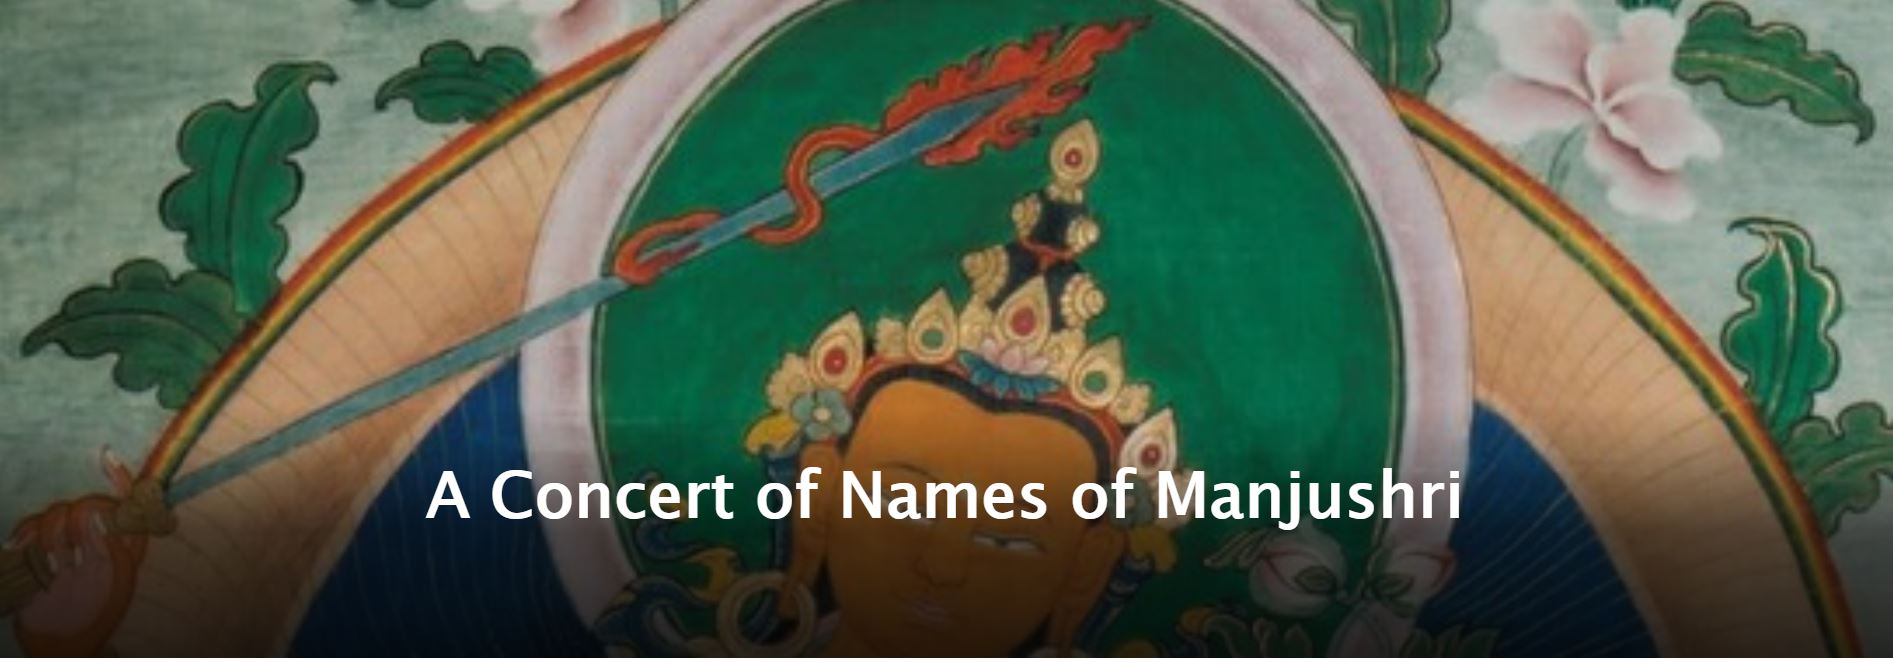 A concert of names of manjushri from the Alexdander Berzin website